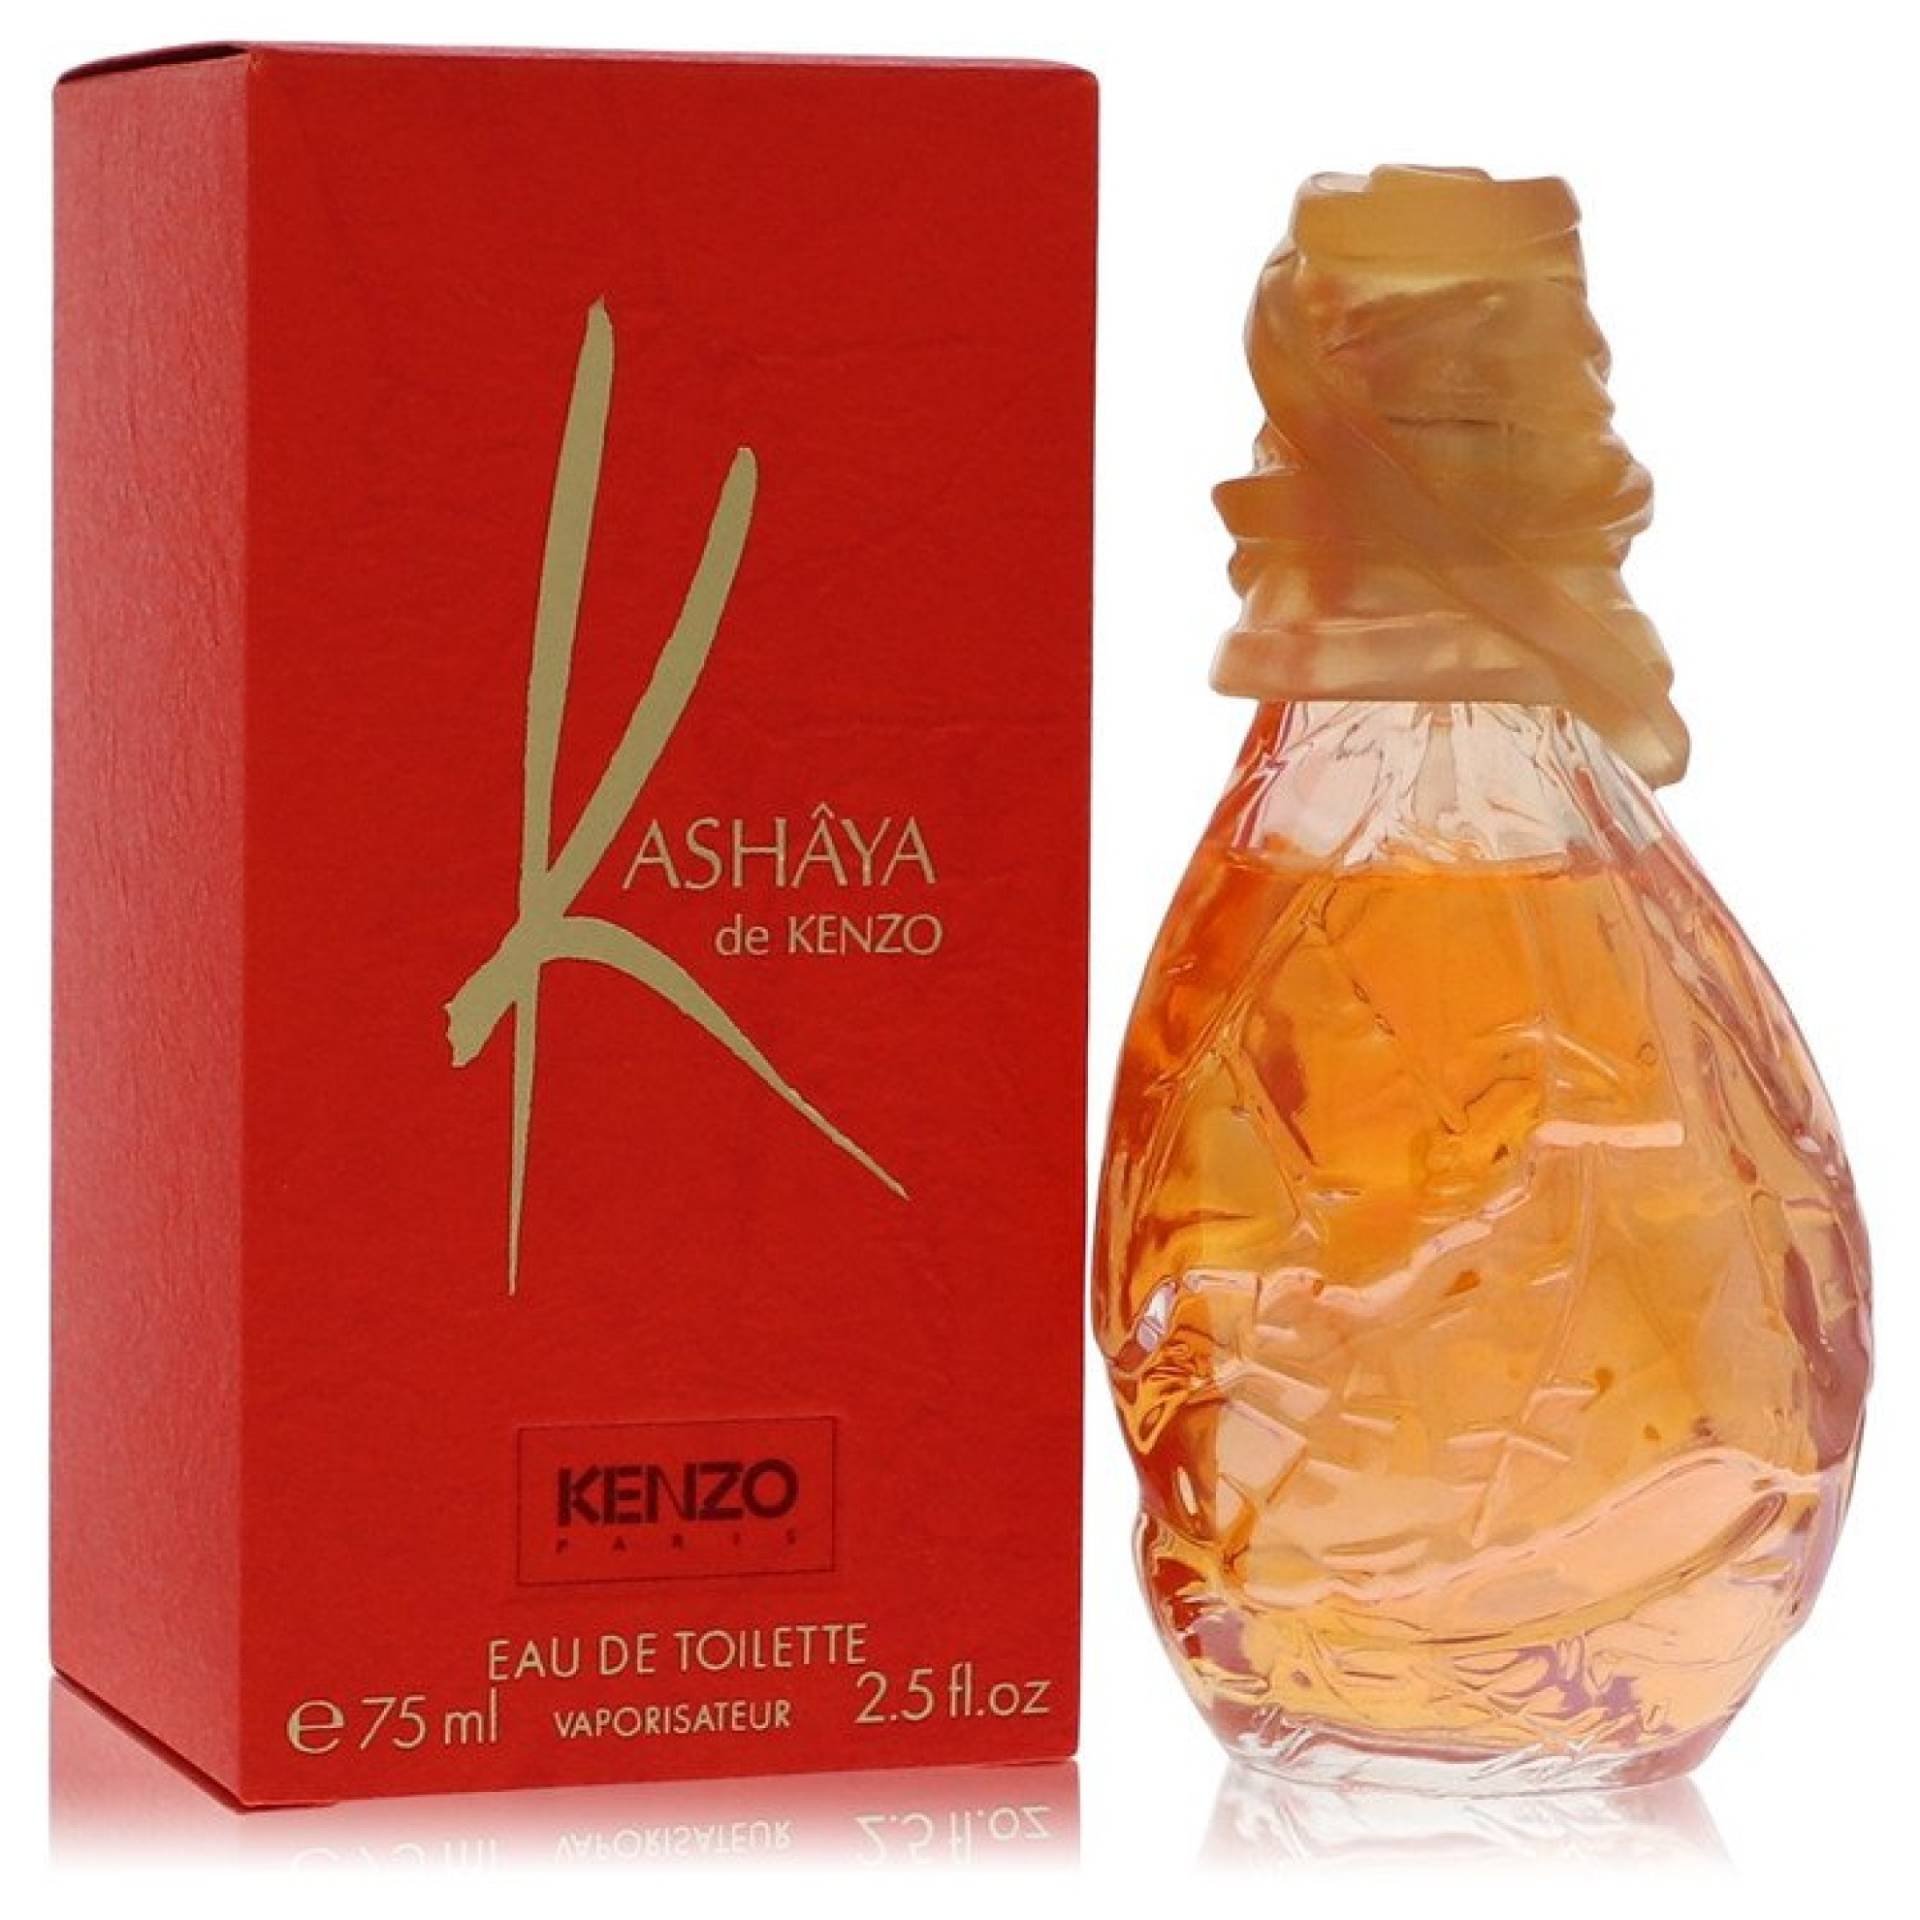 Kenzo KASHAYA DE KENZO Eau De Toilette Spray 75 ml von Kenzo